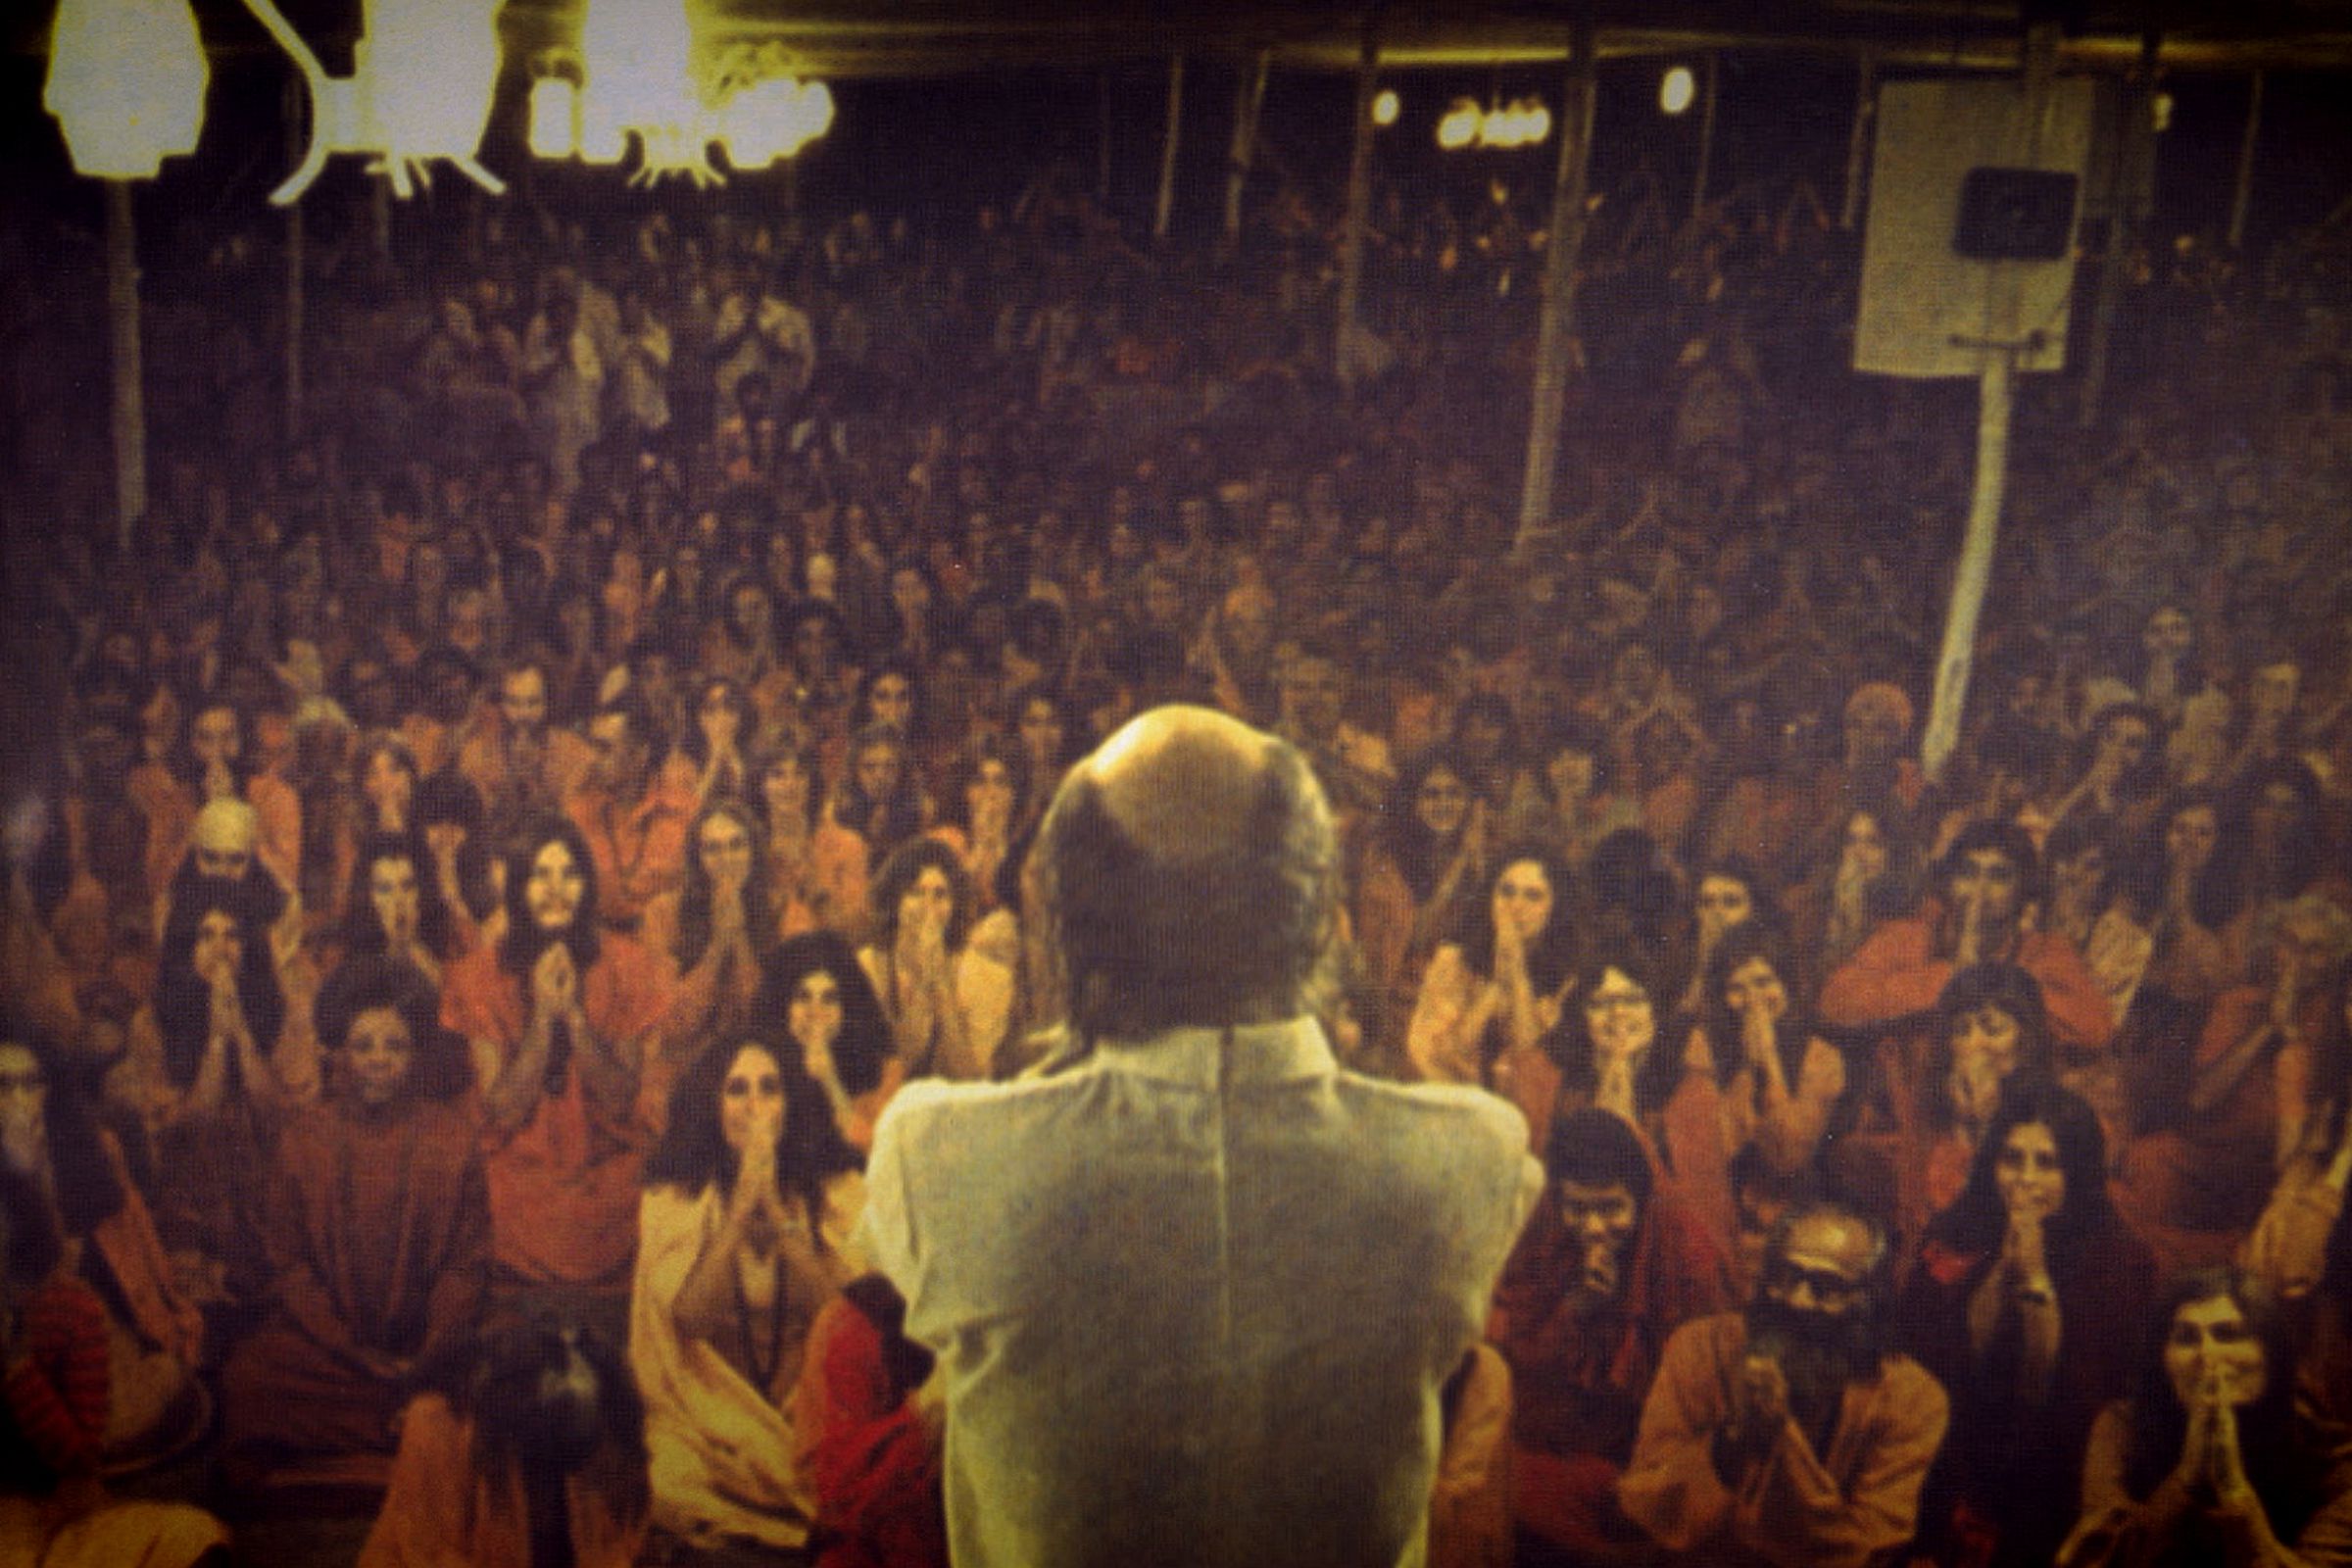 Cult leader Bhagwan Shree Rajneesh and his followers in India.